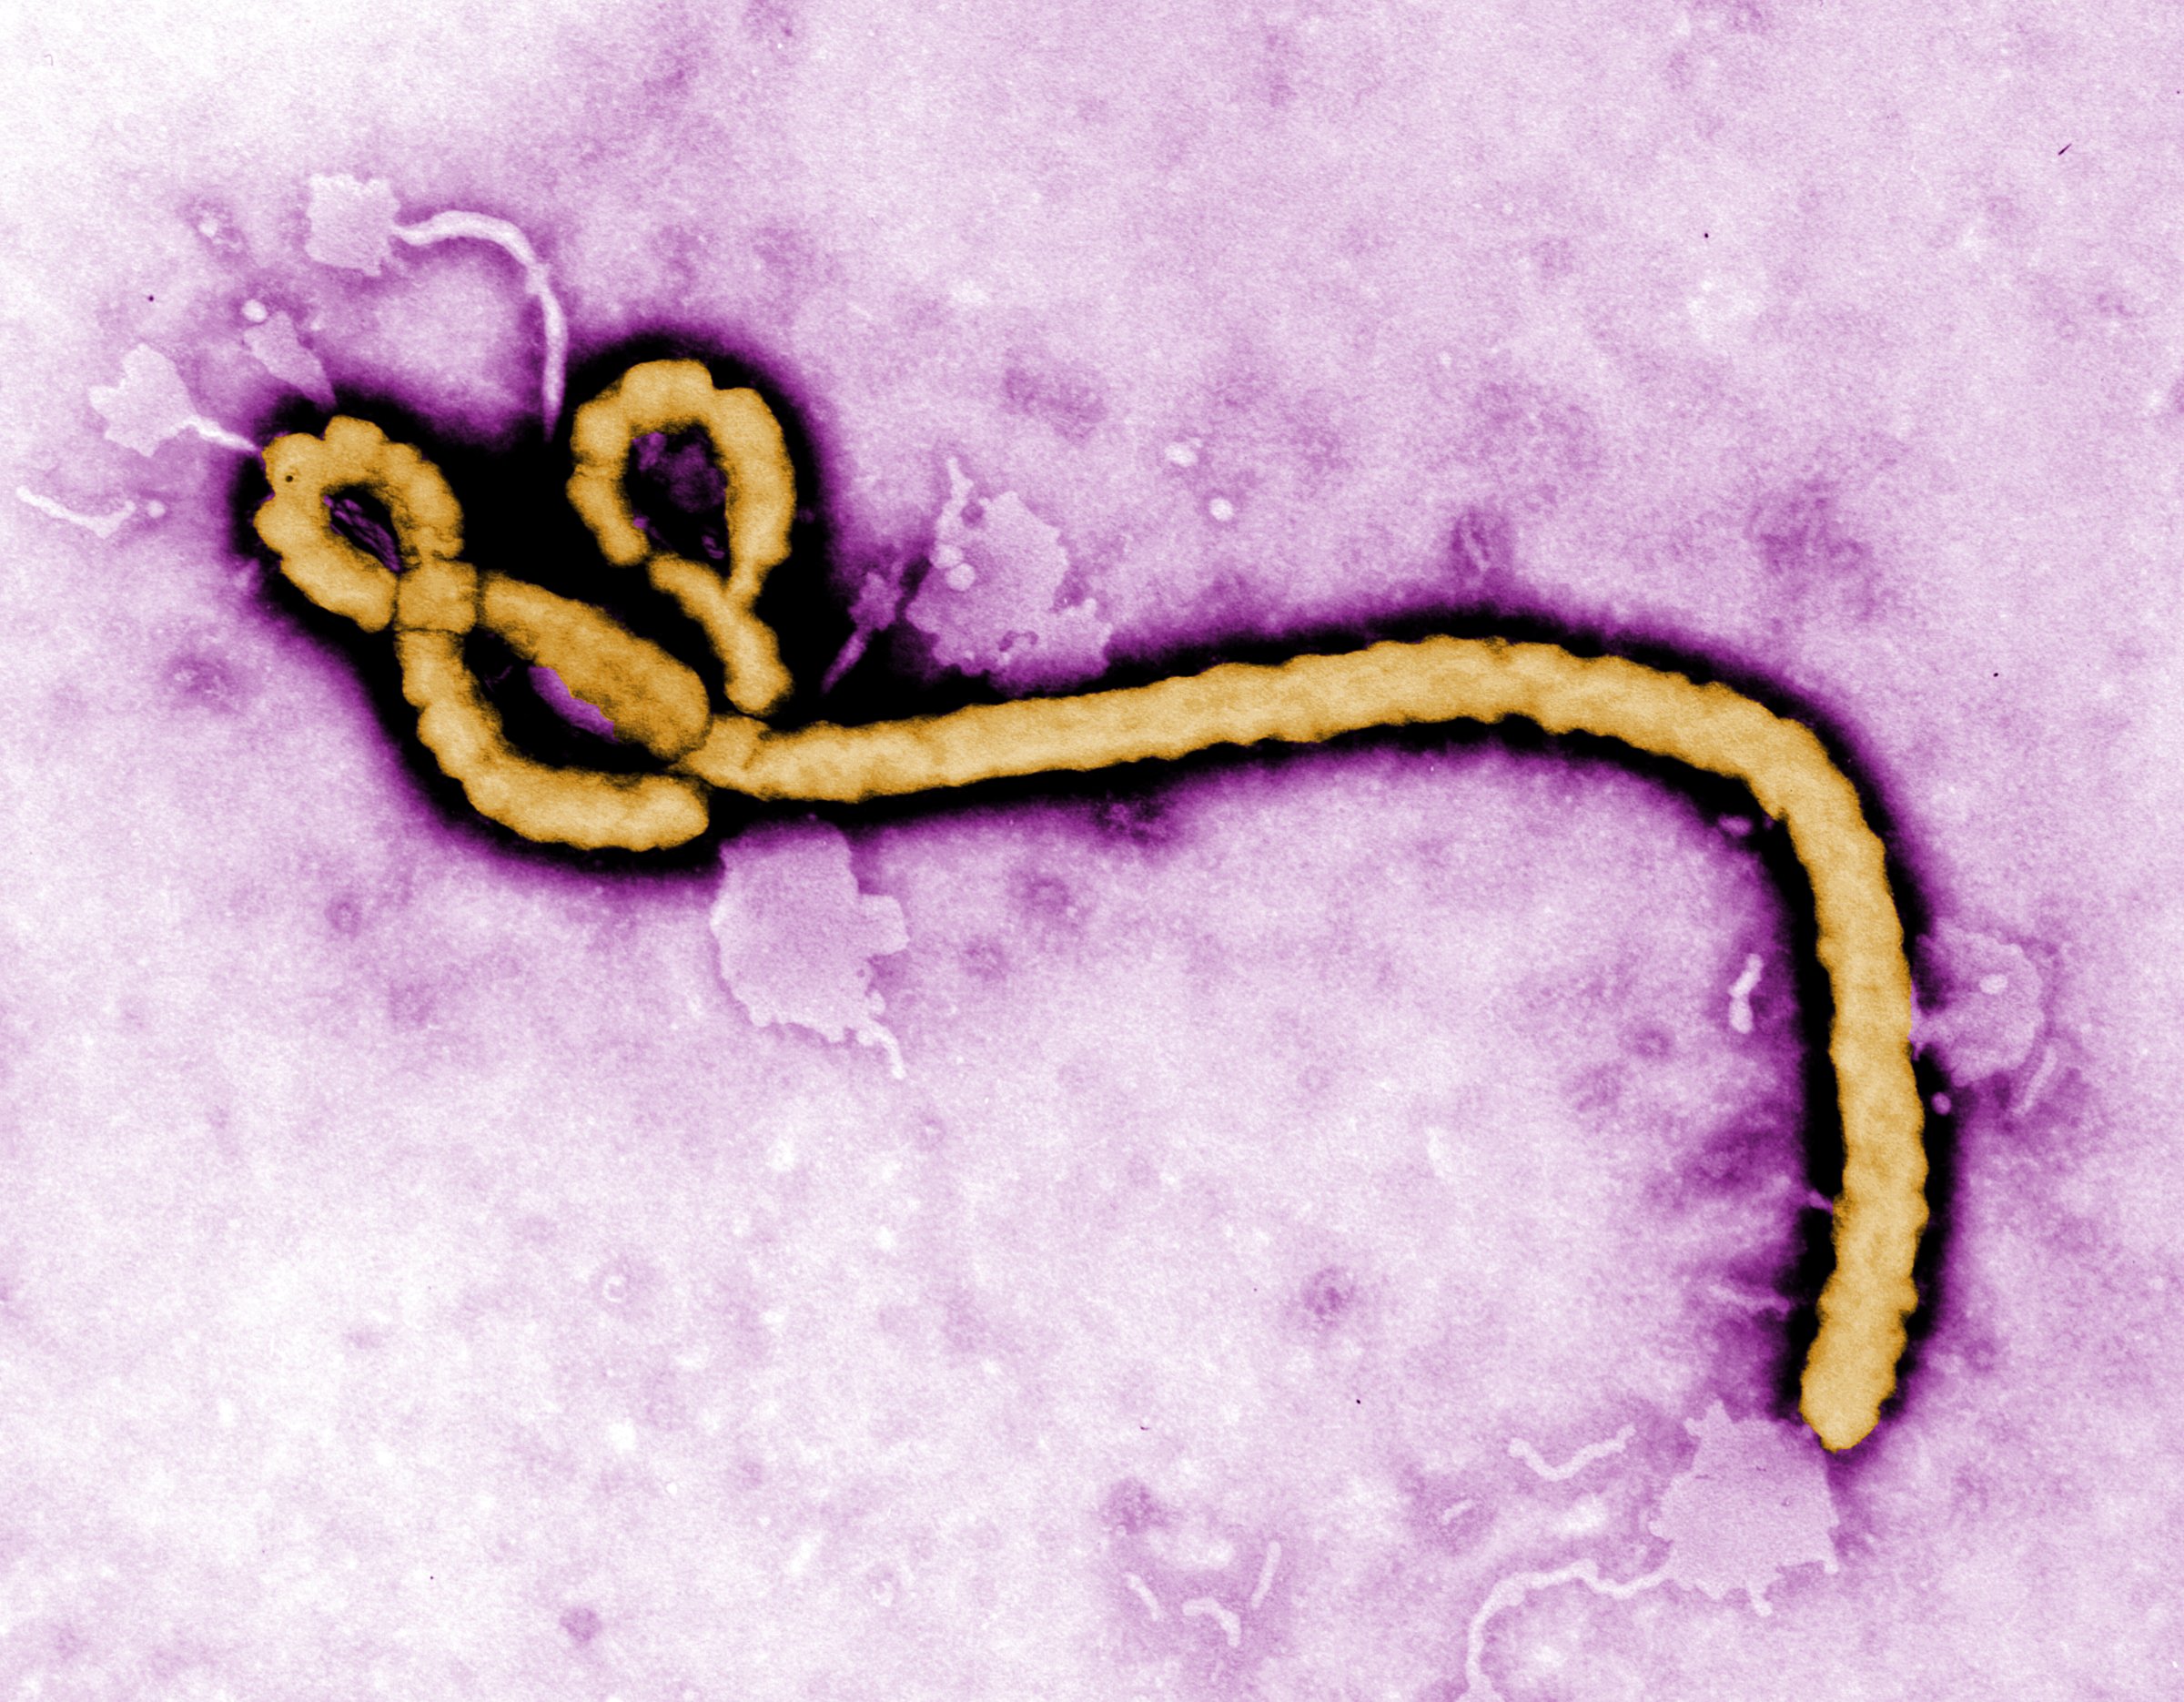 Transmission electron micrograph of Ebola virus.